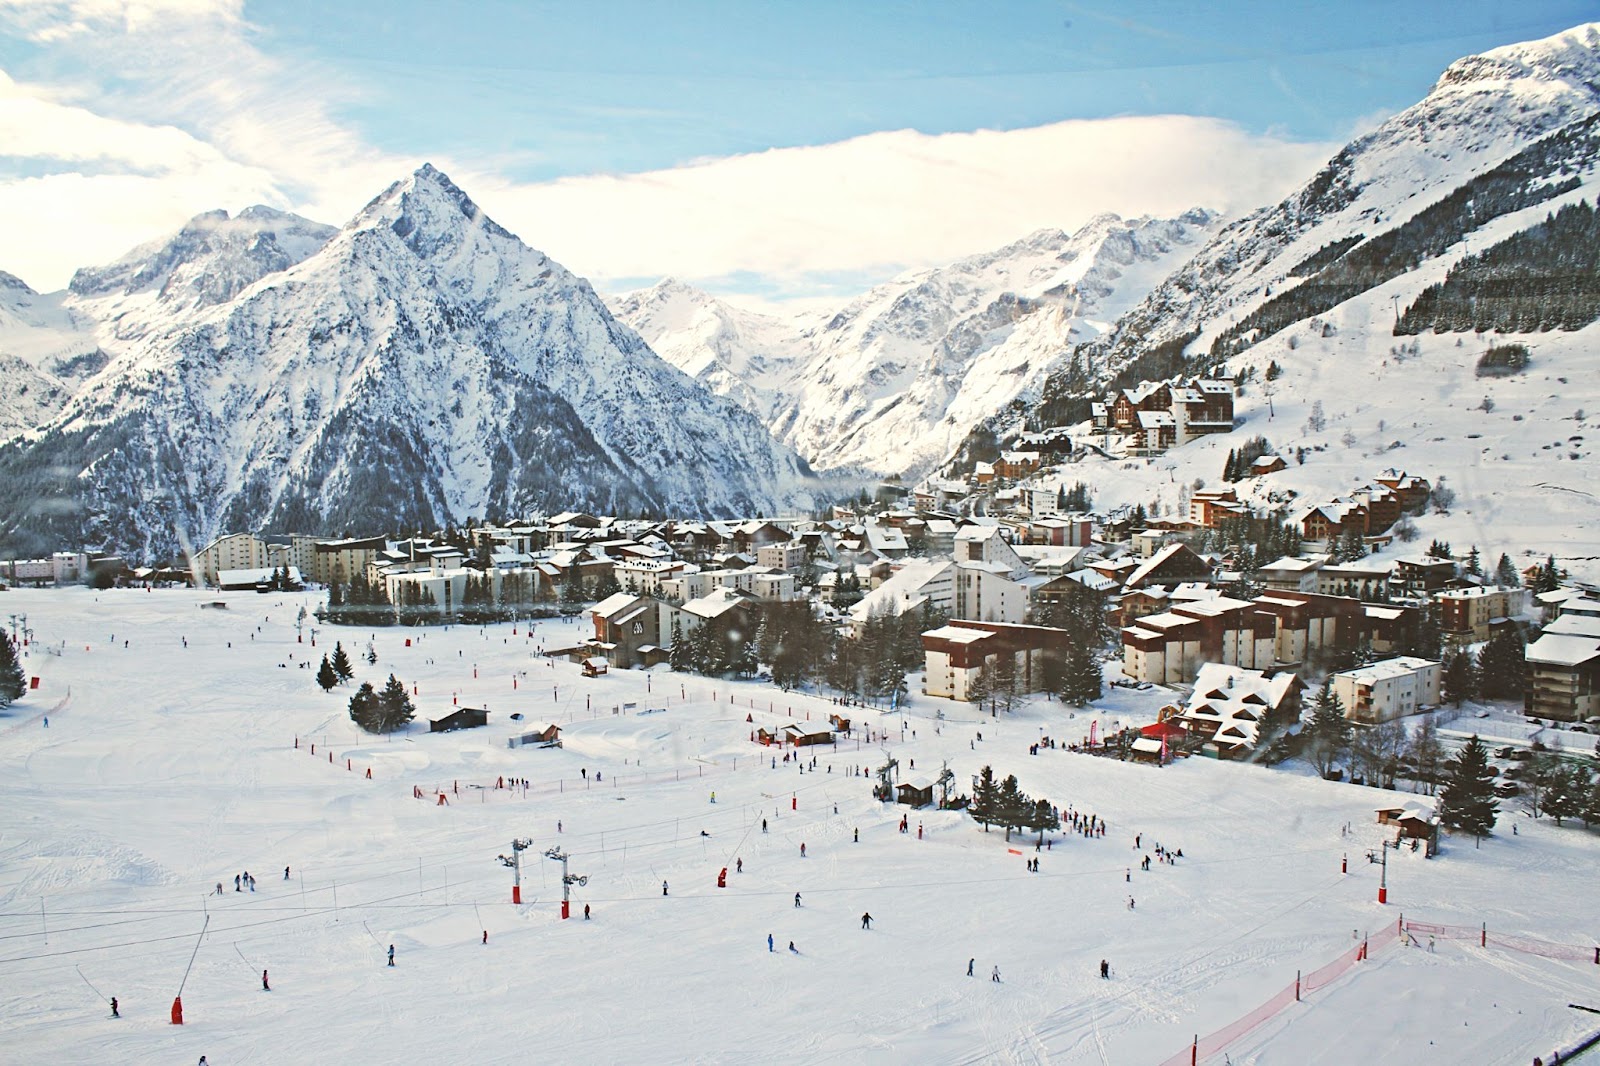 Enormous ski resort amongst snowy mountains